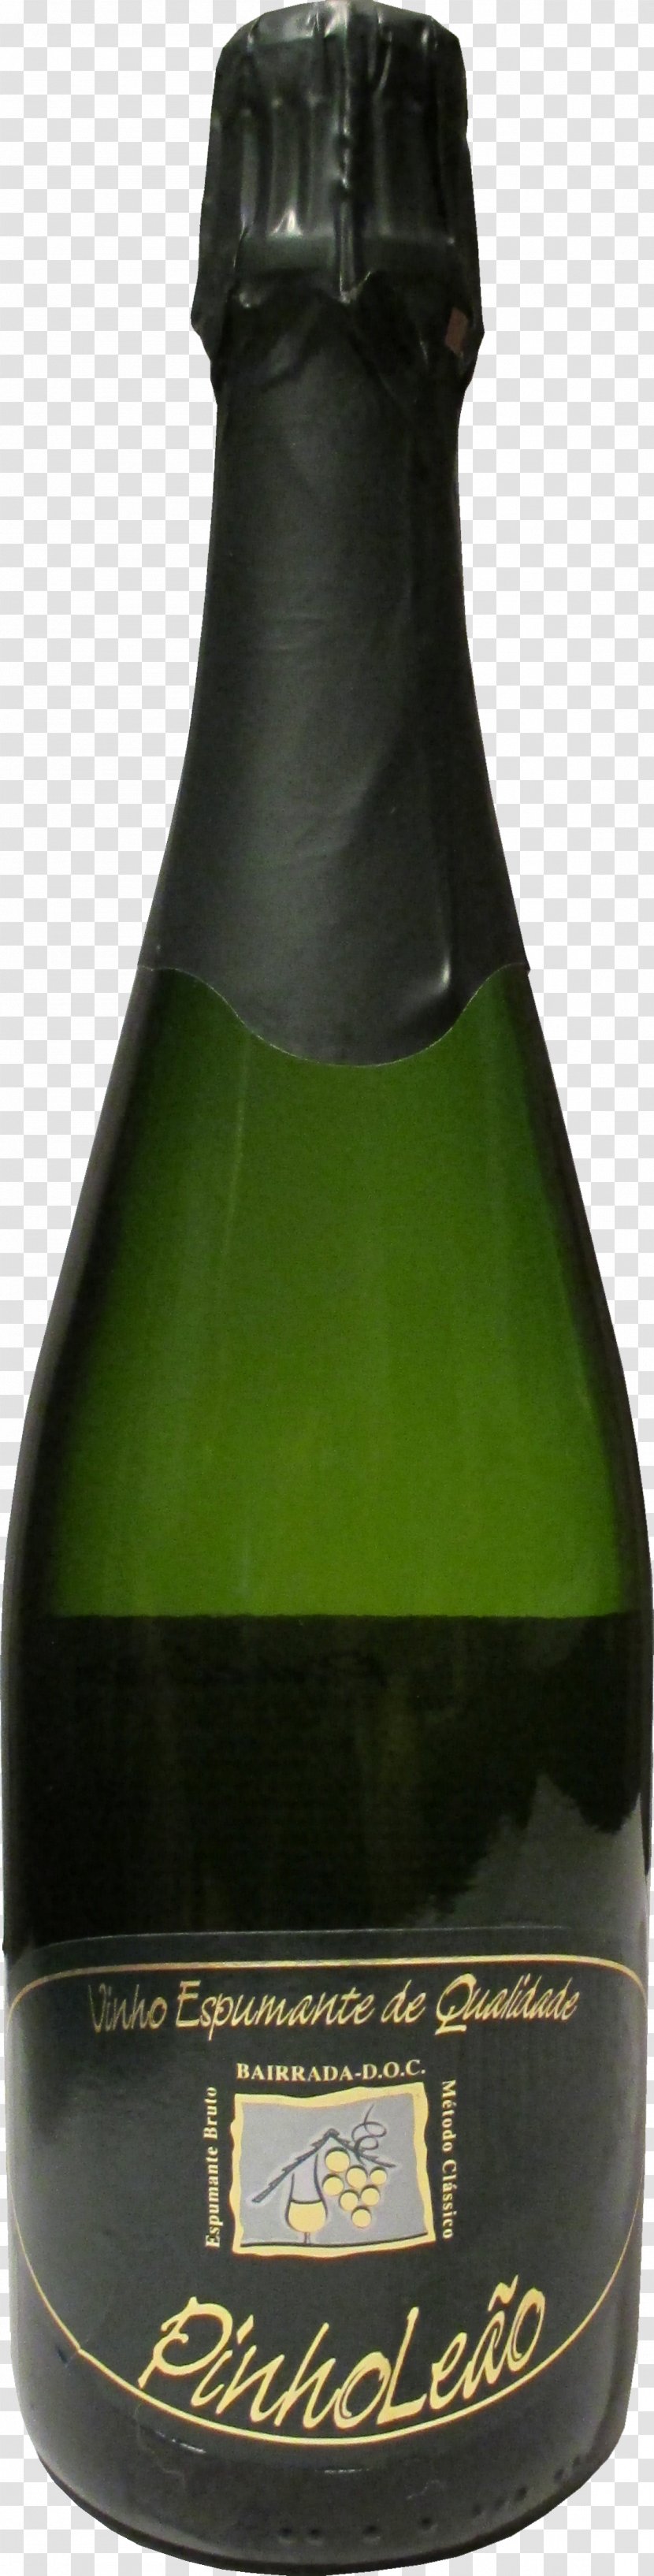 Champagne Dessert Wine Glass Bottle Liqueur - Alcoholic Beverage Transparent PNG